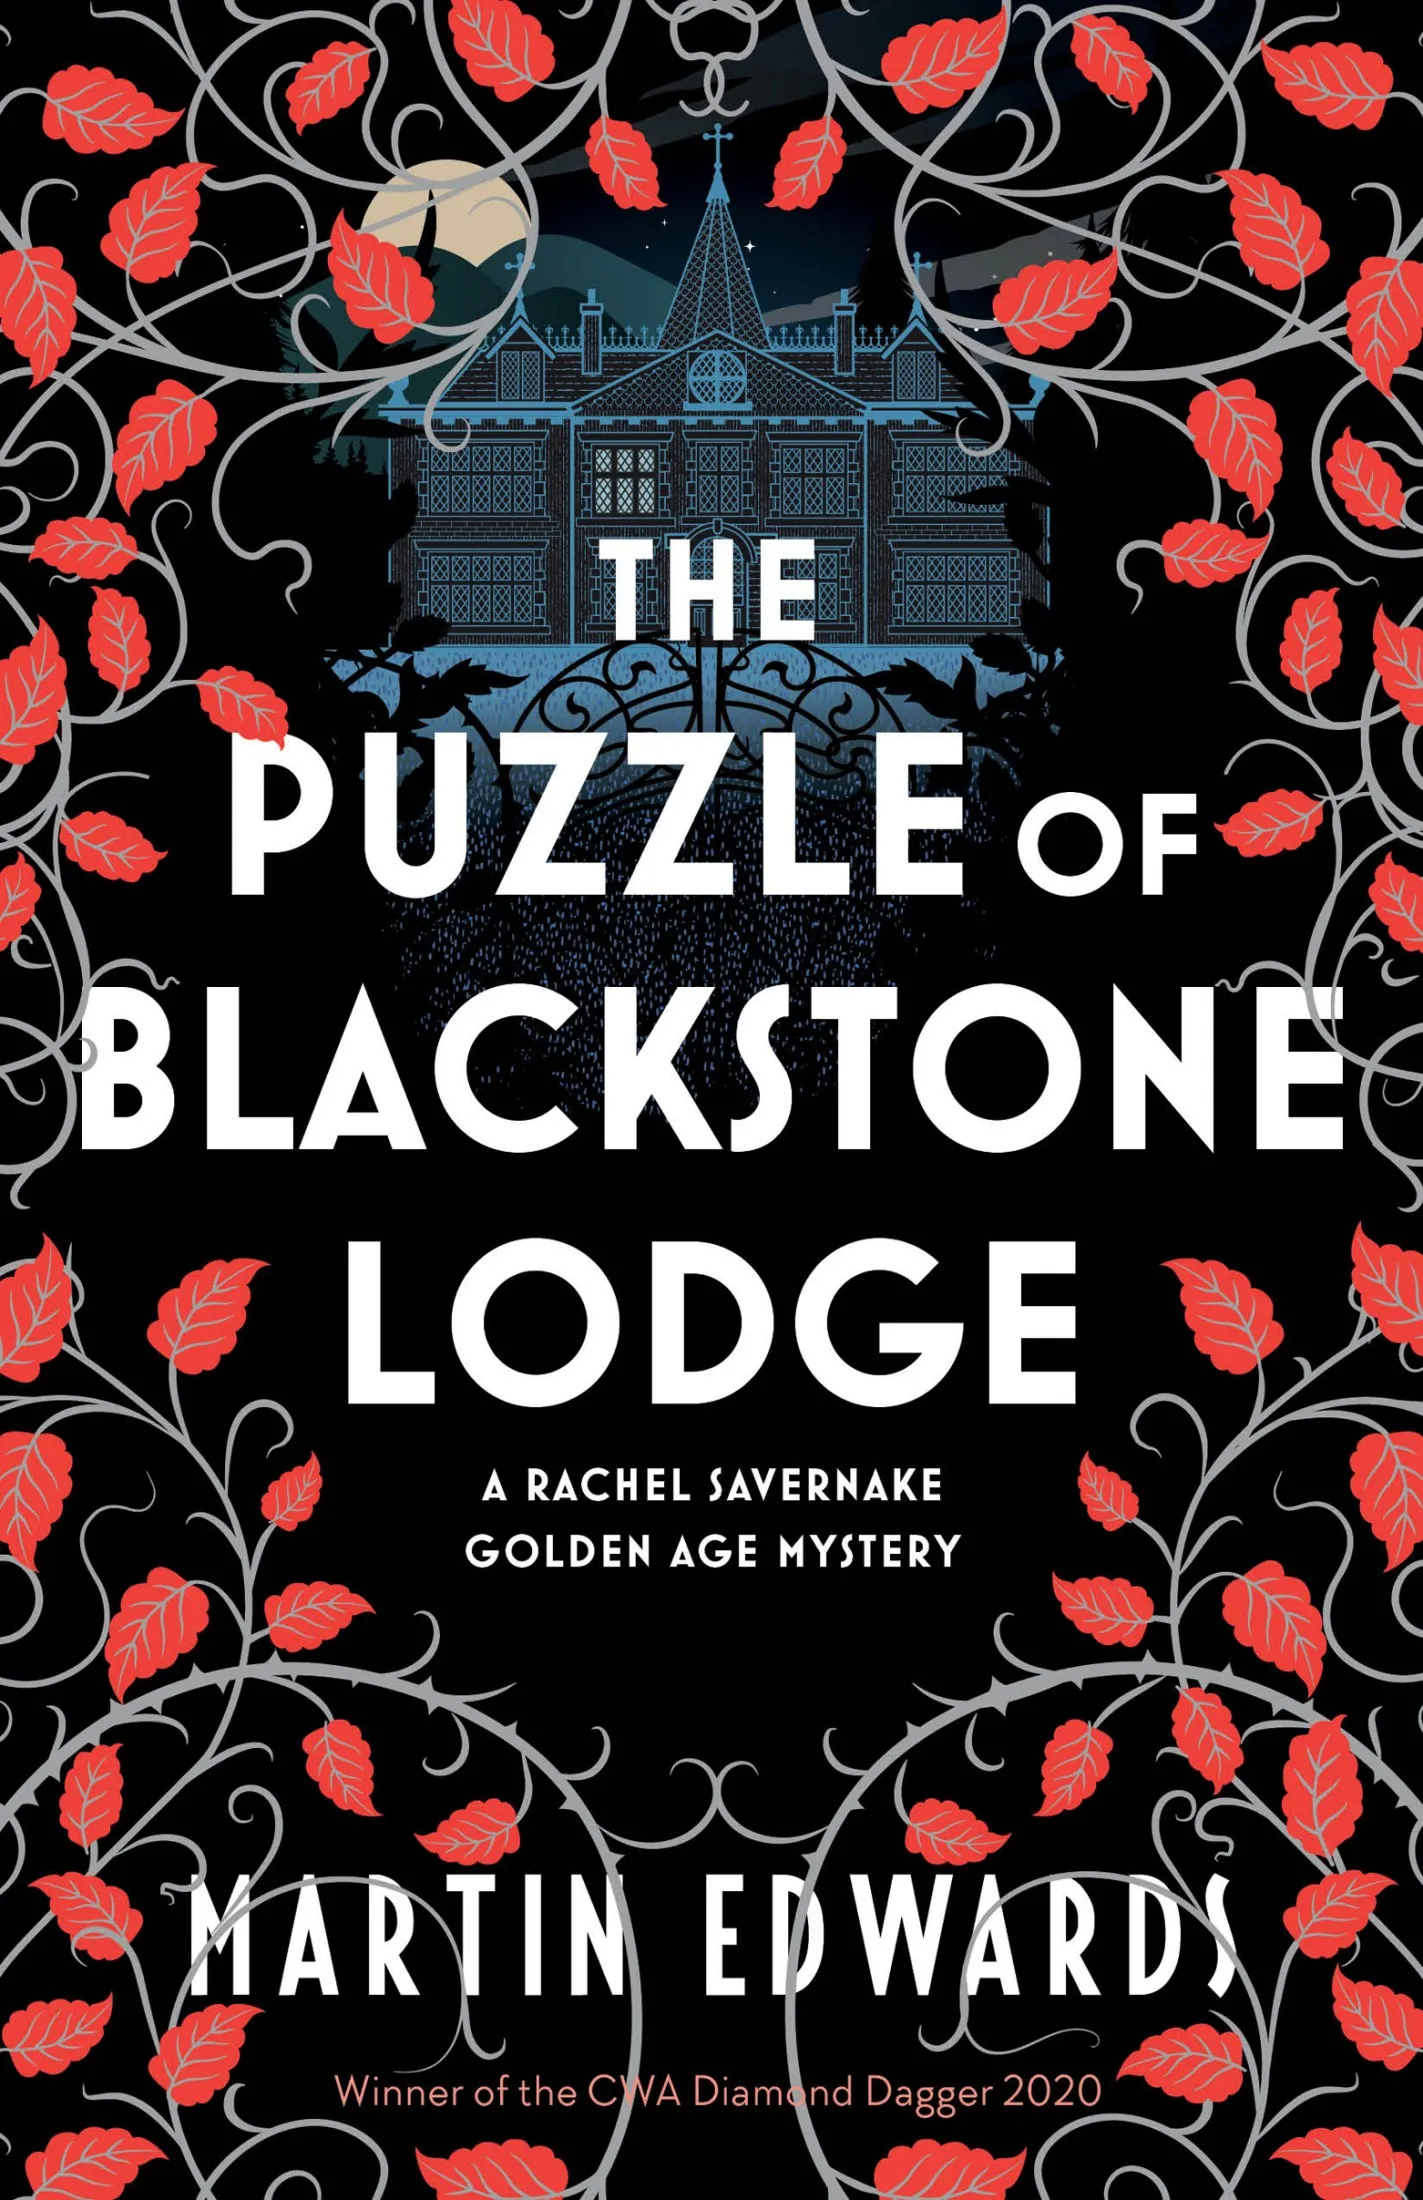 The Puzzle of Blackstone Lodge (Rachel Savernake Golden Age Mysteries #3)